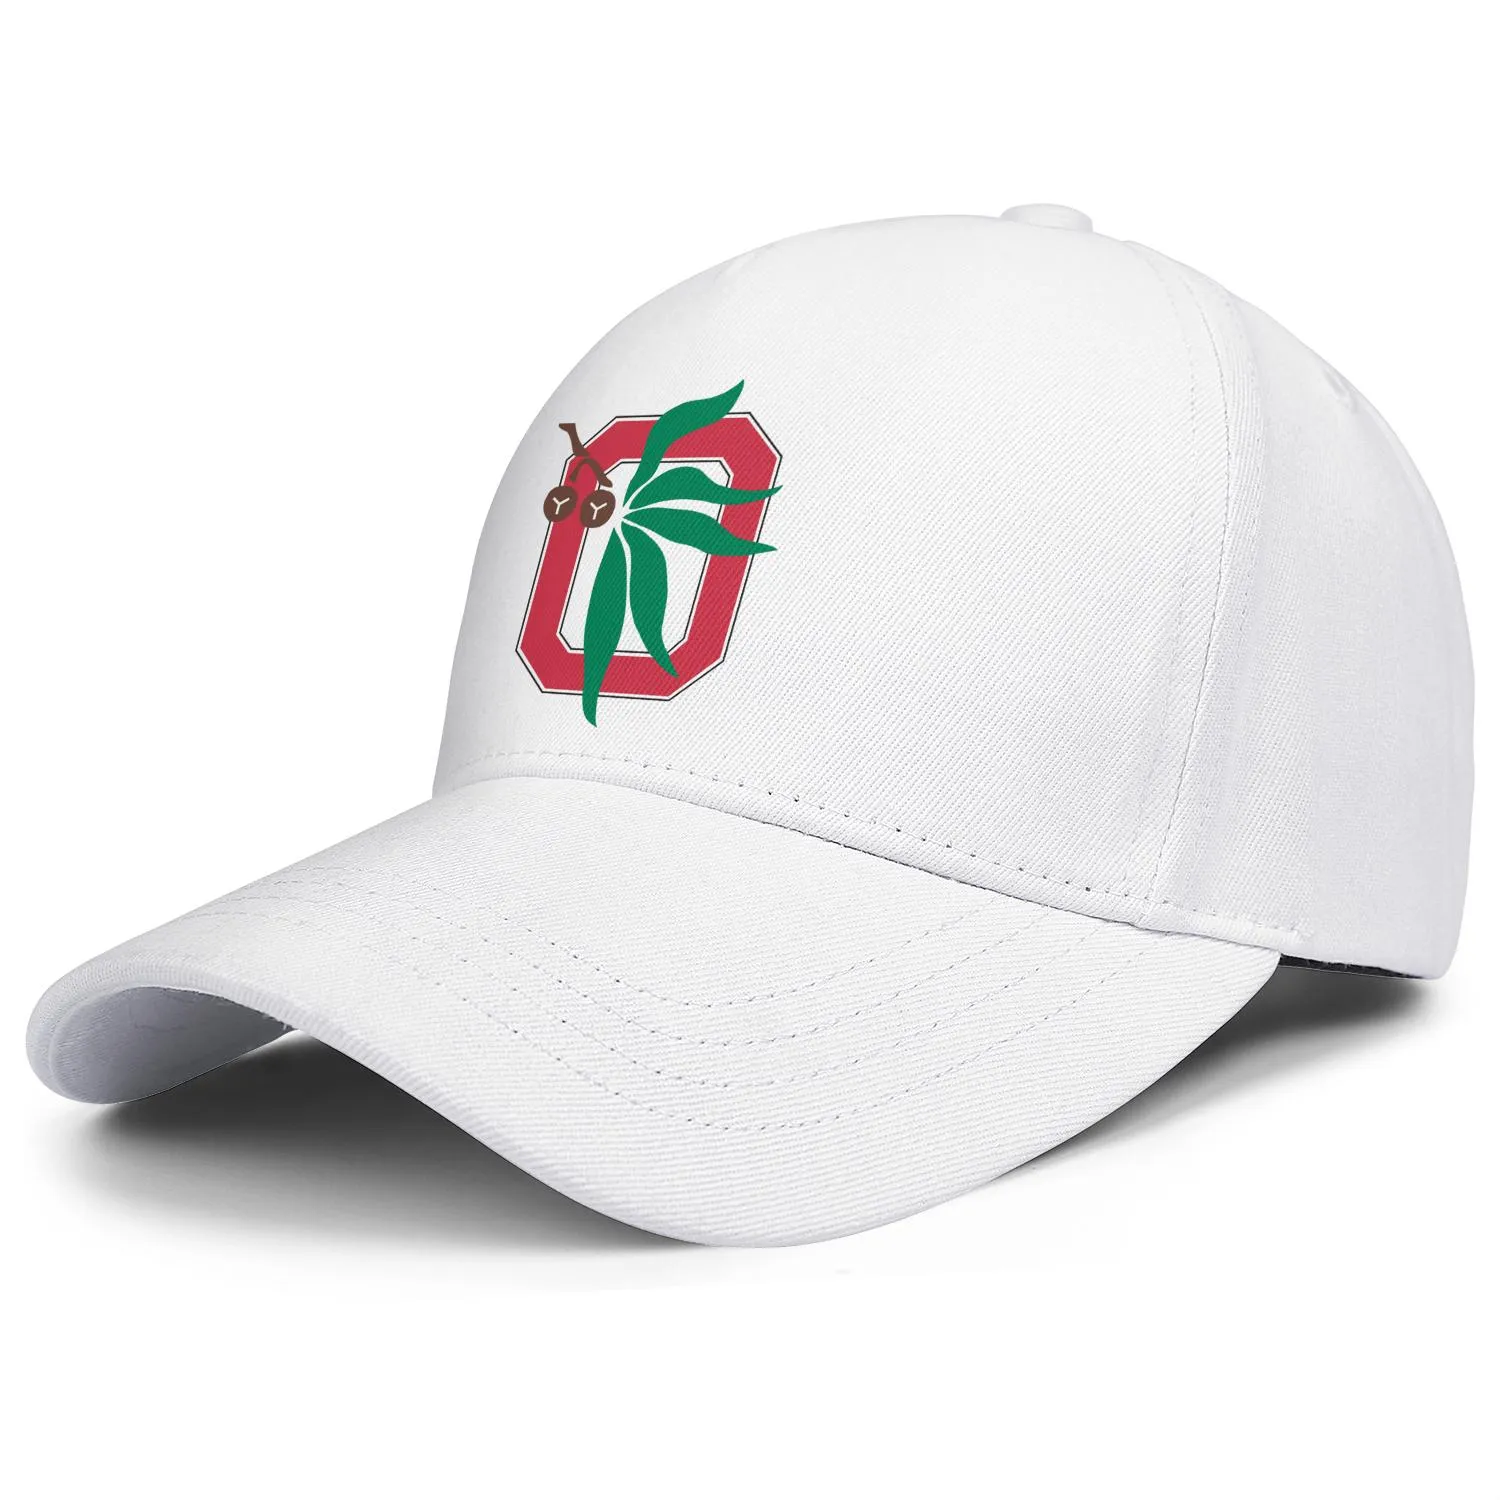 Fashion Ohio State Buckeyes Unisex Baseball Cap Fitted Best Trucke Hats 388 football logo Marble Print white black Gay pride1801987